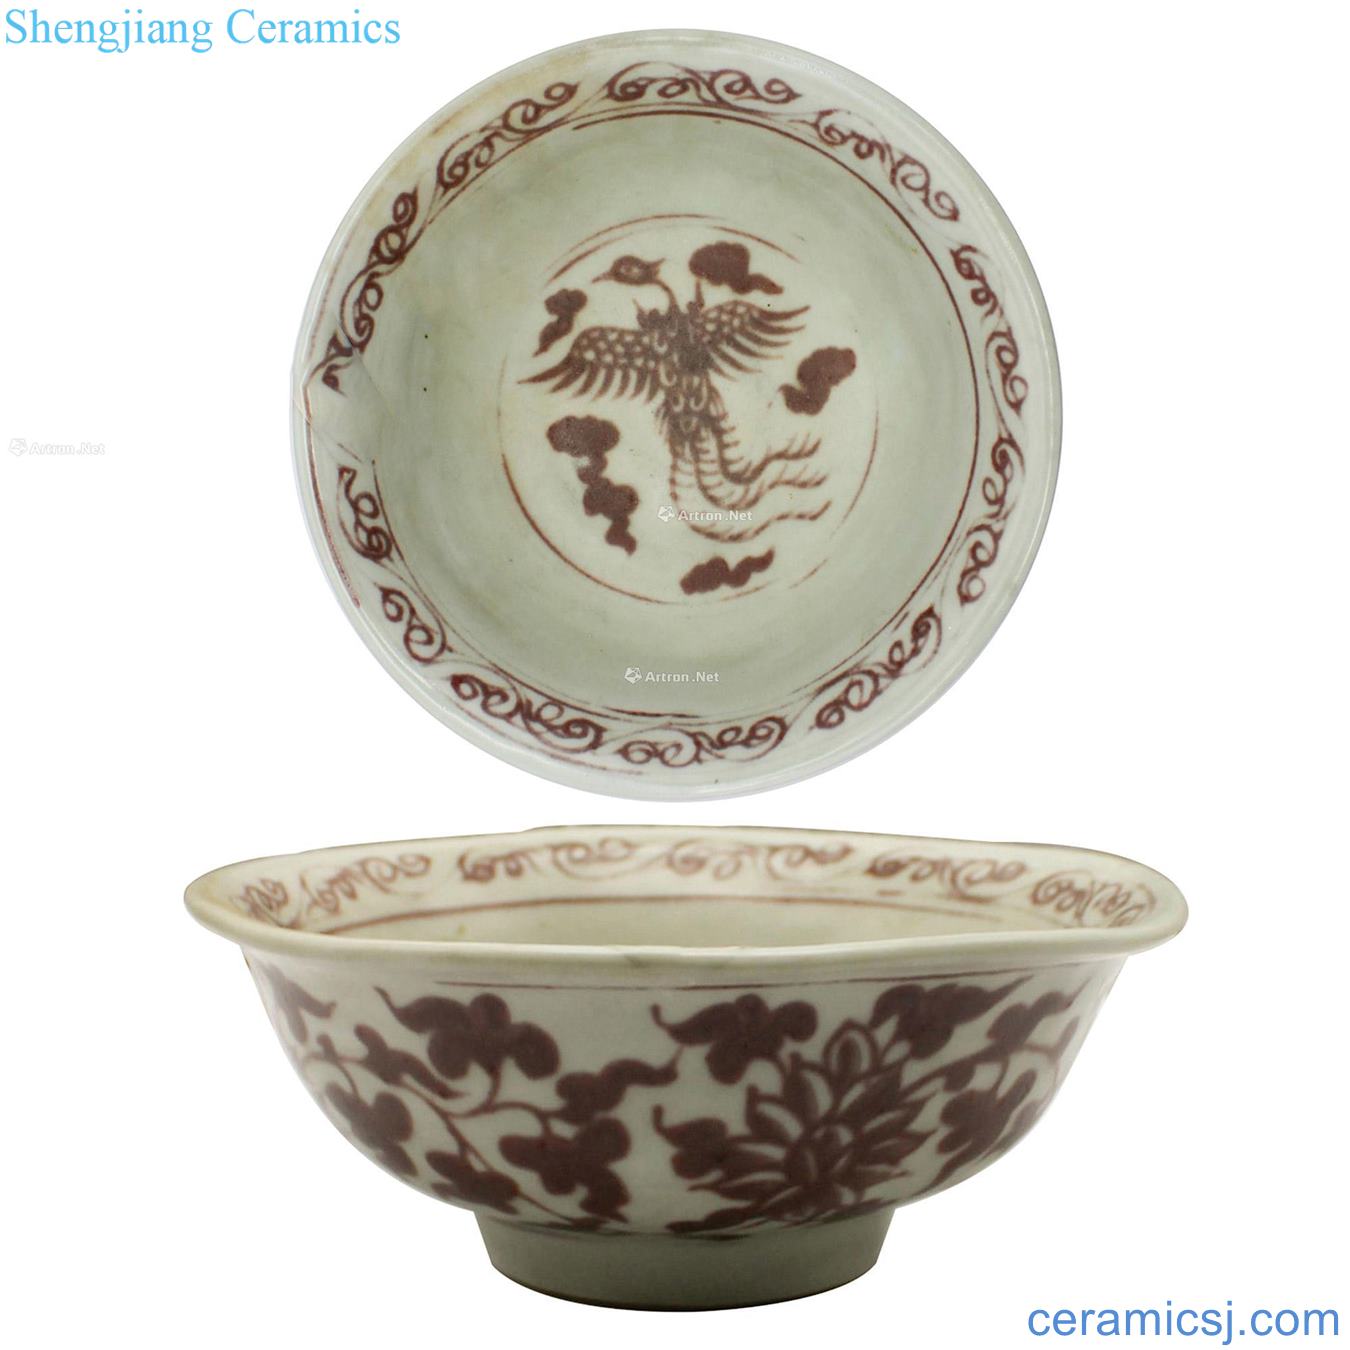 Ming Wear peony fung youligong green-splashed bowls